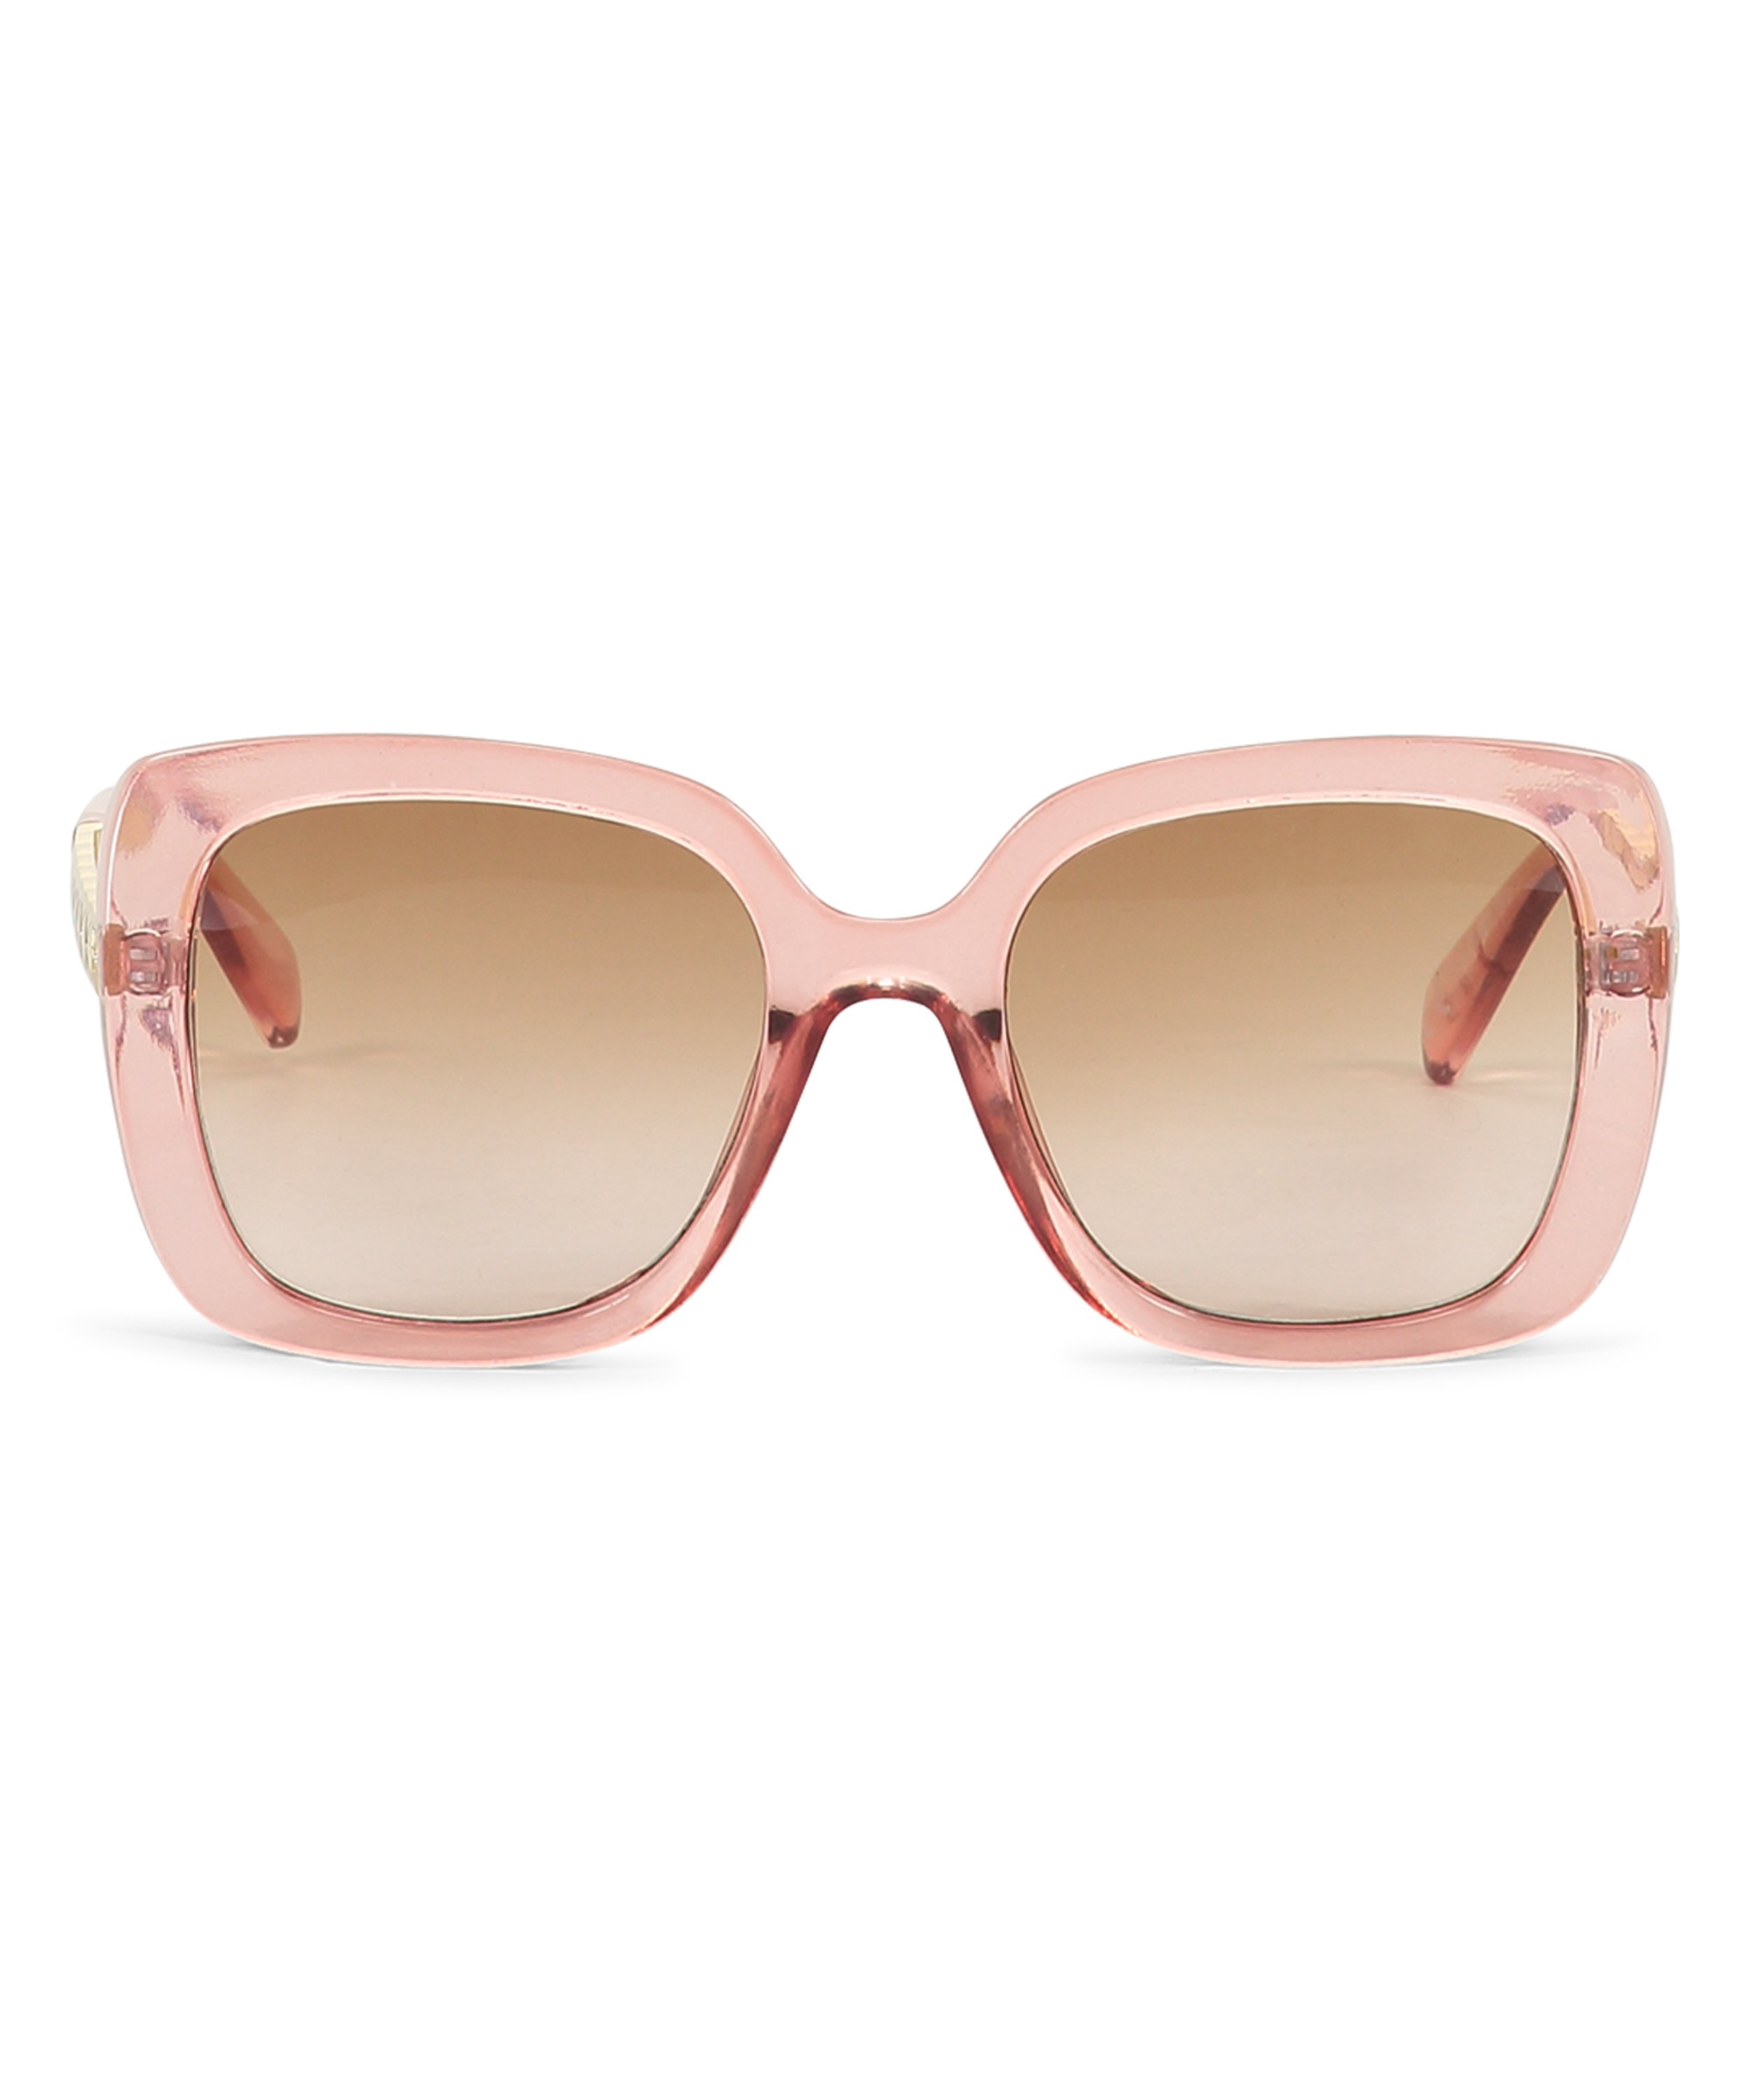 Sunglasses, Pink, main